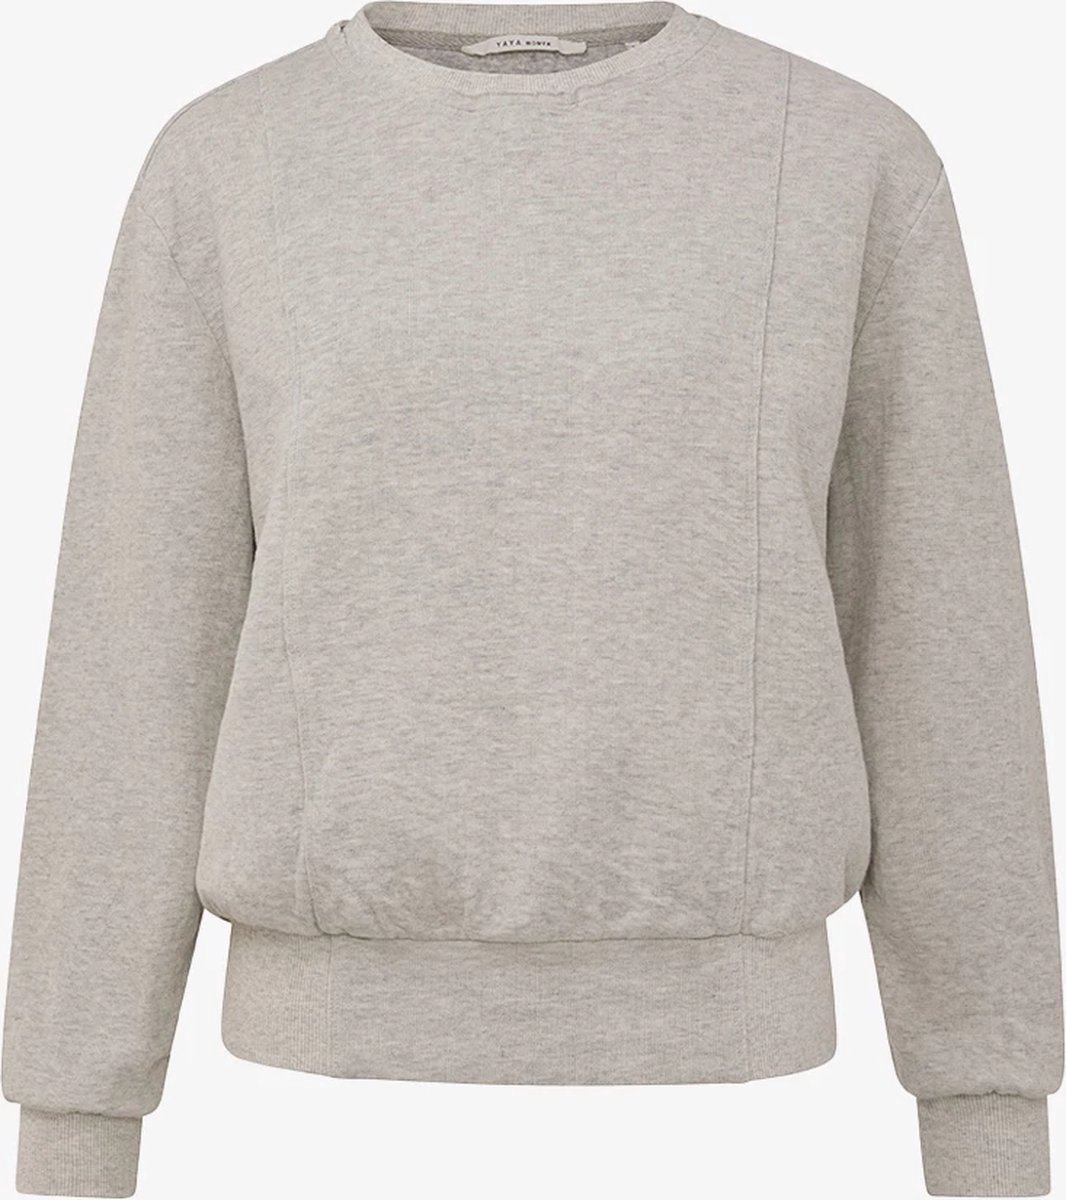 YAYA - grijze sweatshirt - 109007-207